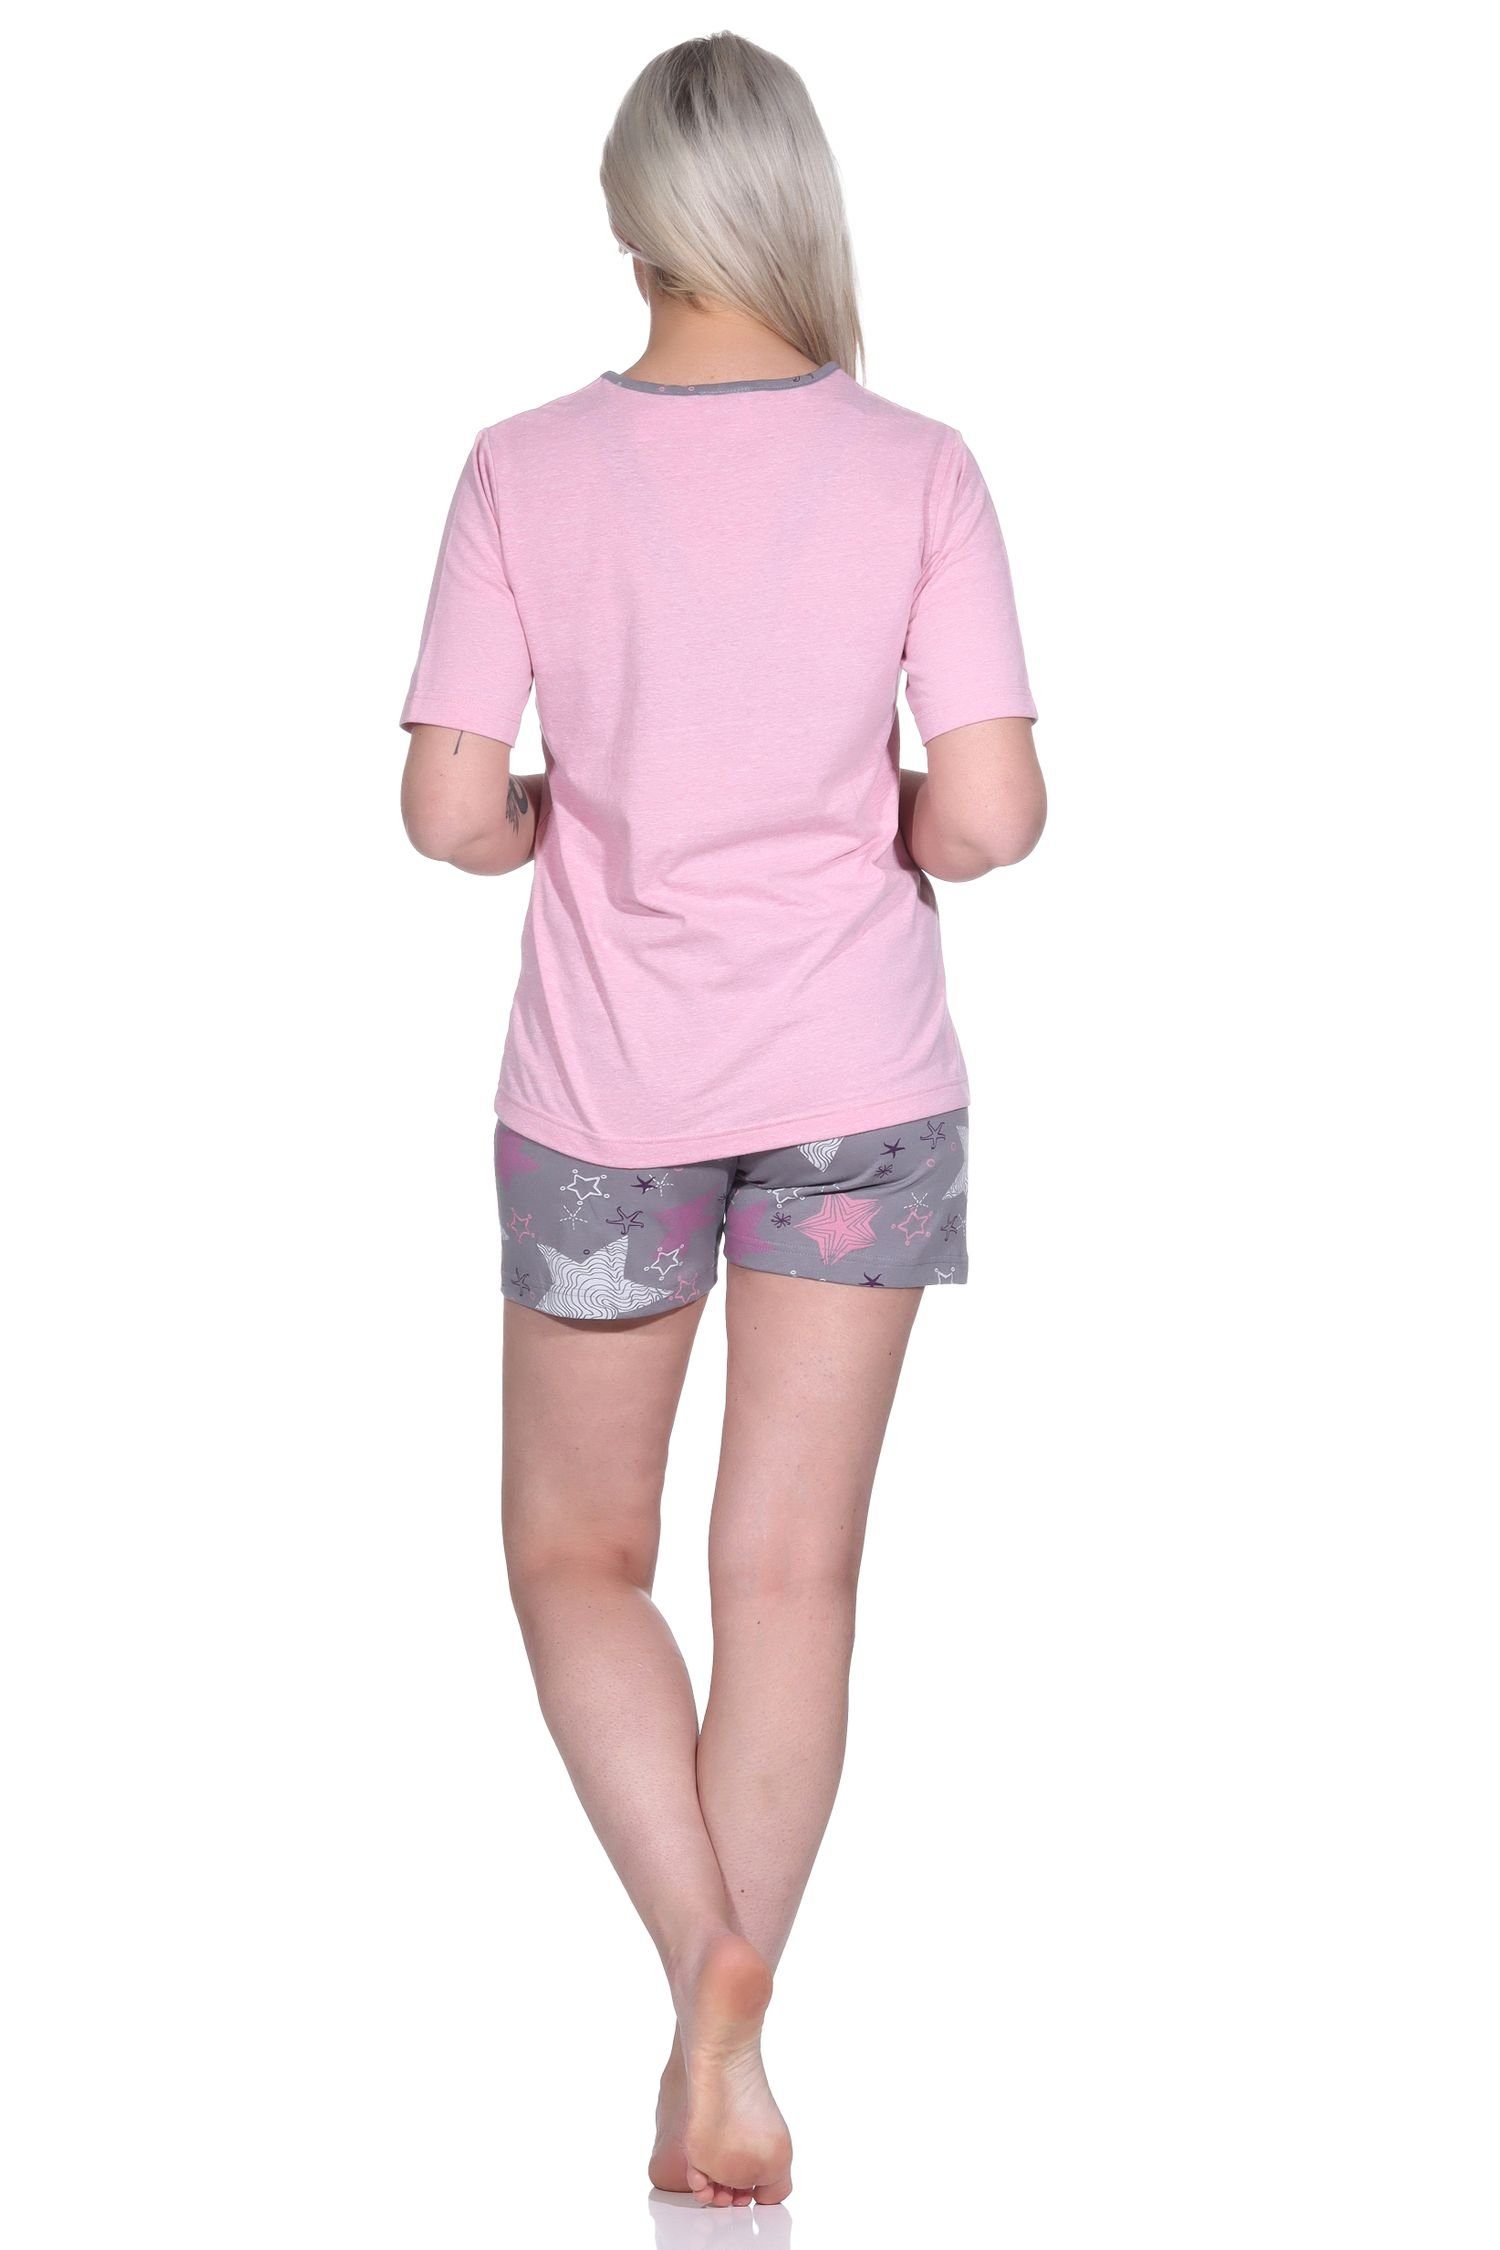 Normann Pyjama Damen Shorty Pyjama Sterne-Optik - 783 in Shorts 10 123 kurzen rosa mit